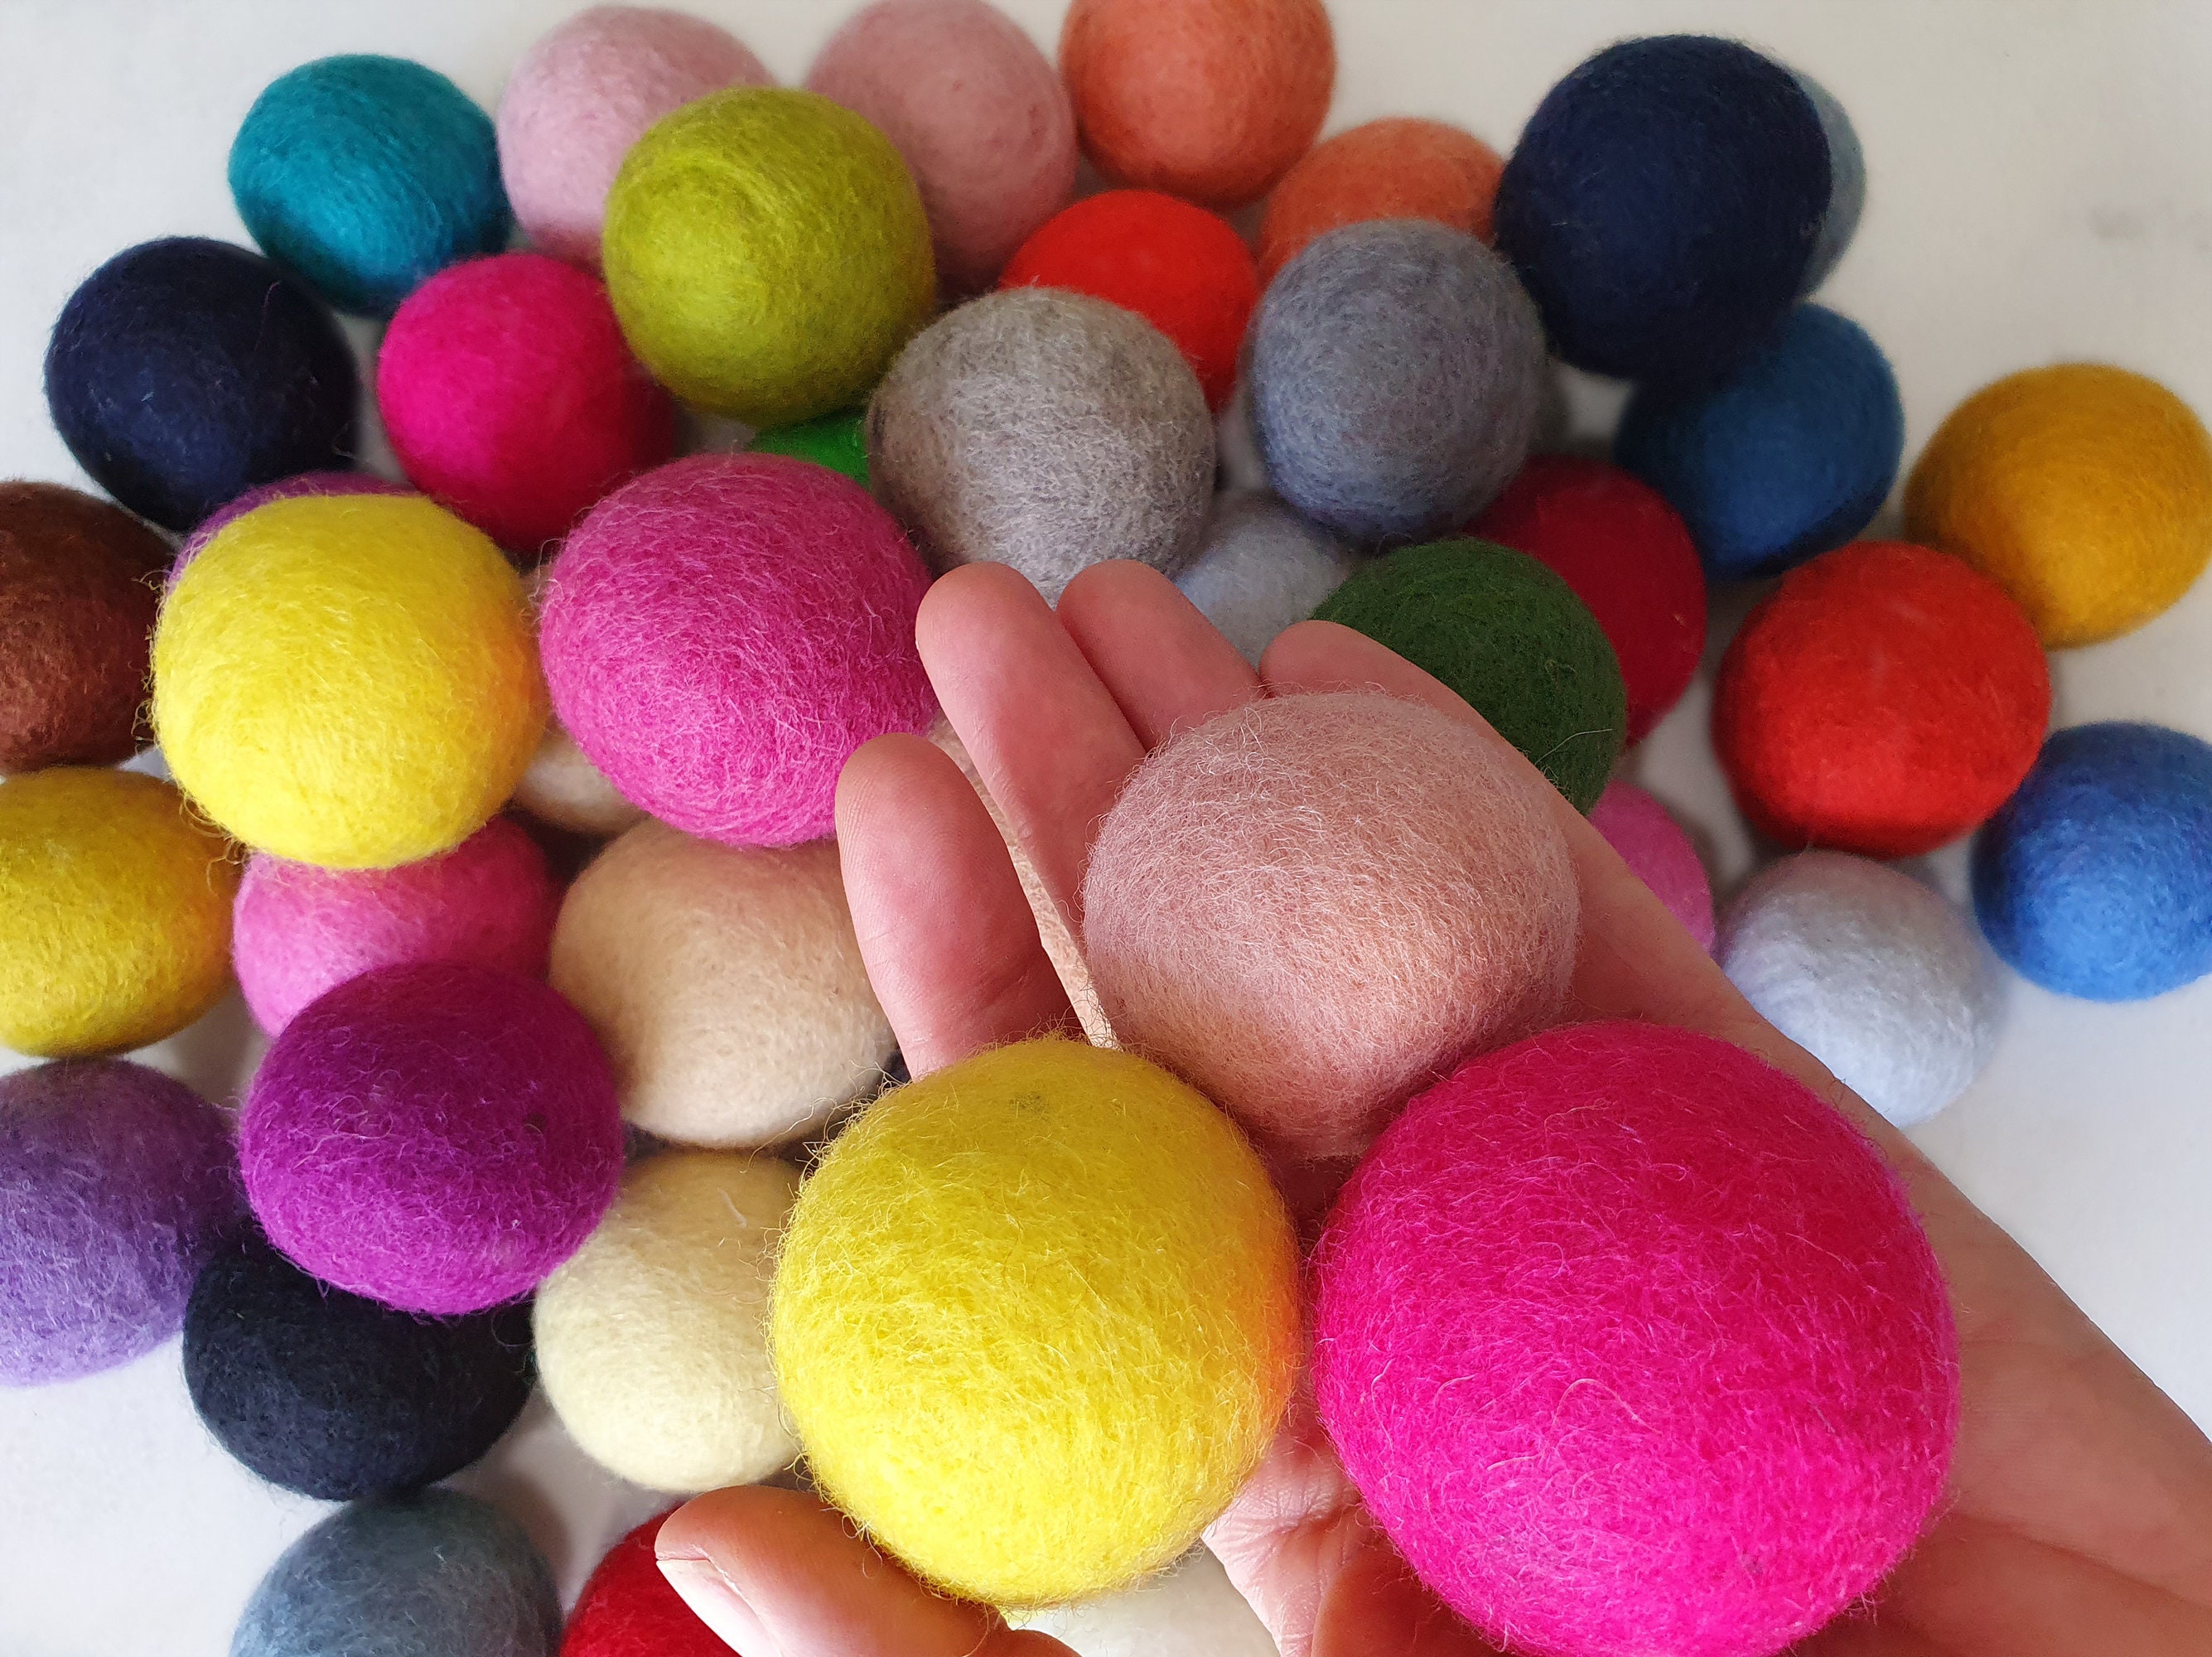 Wool Felt Balls - Size, Approx. 2CM - (18 - 20mm) - 25 Felt Balls Pack -  Color Almond-7005 - Almond color felt balls - 2CM Skin Felt Balls